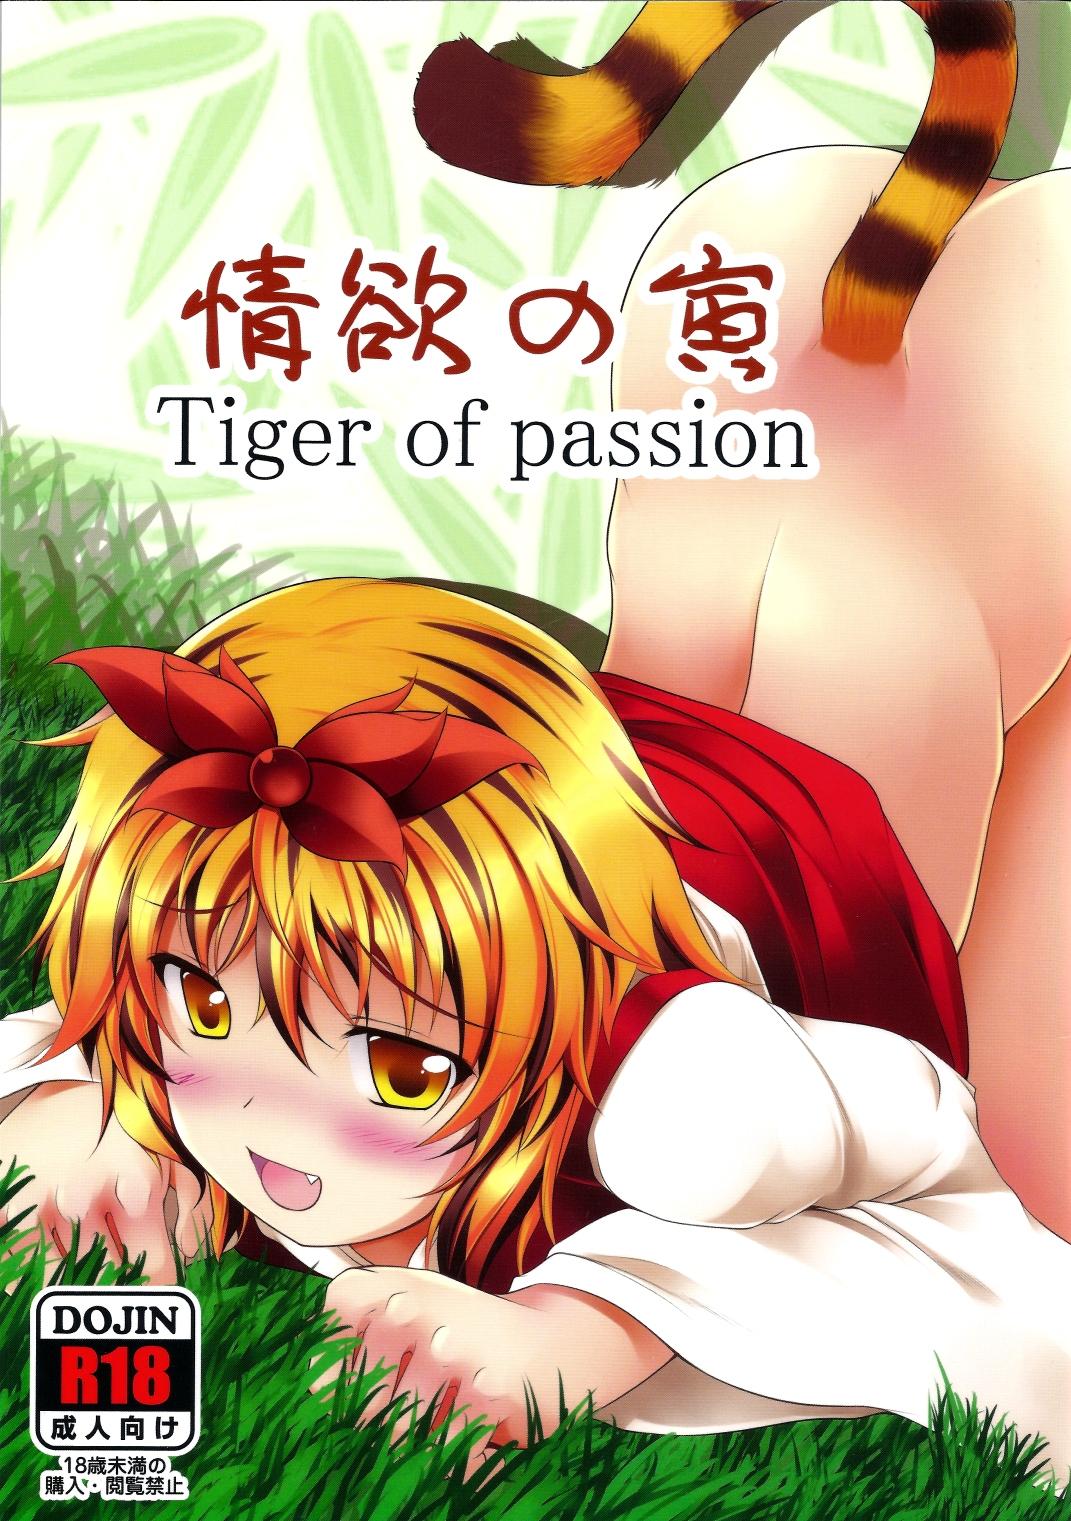 Jouyoku no Tora - Tiger of passion 0